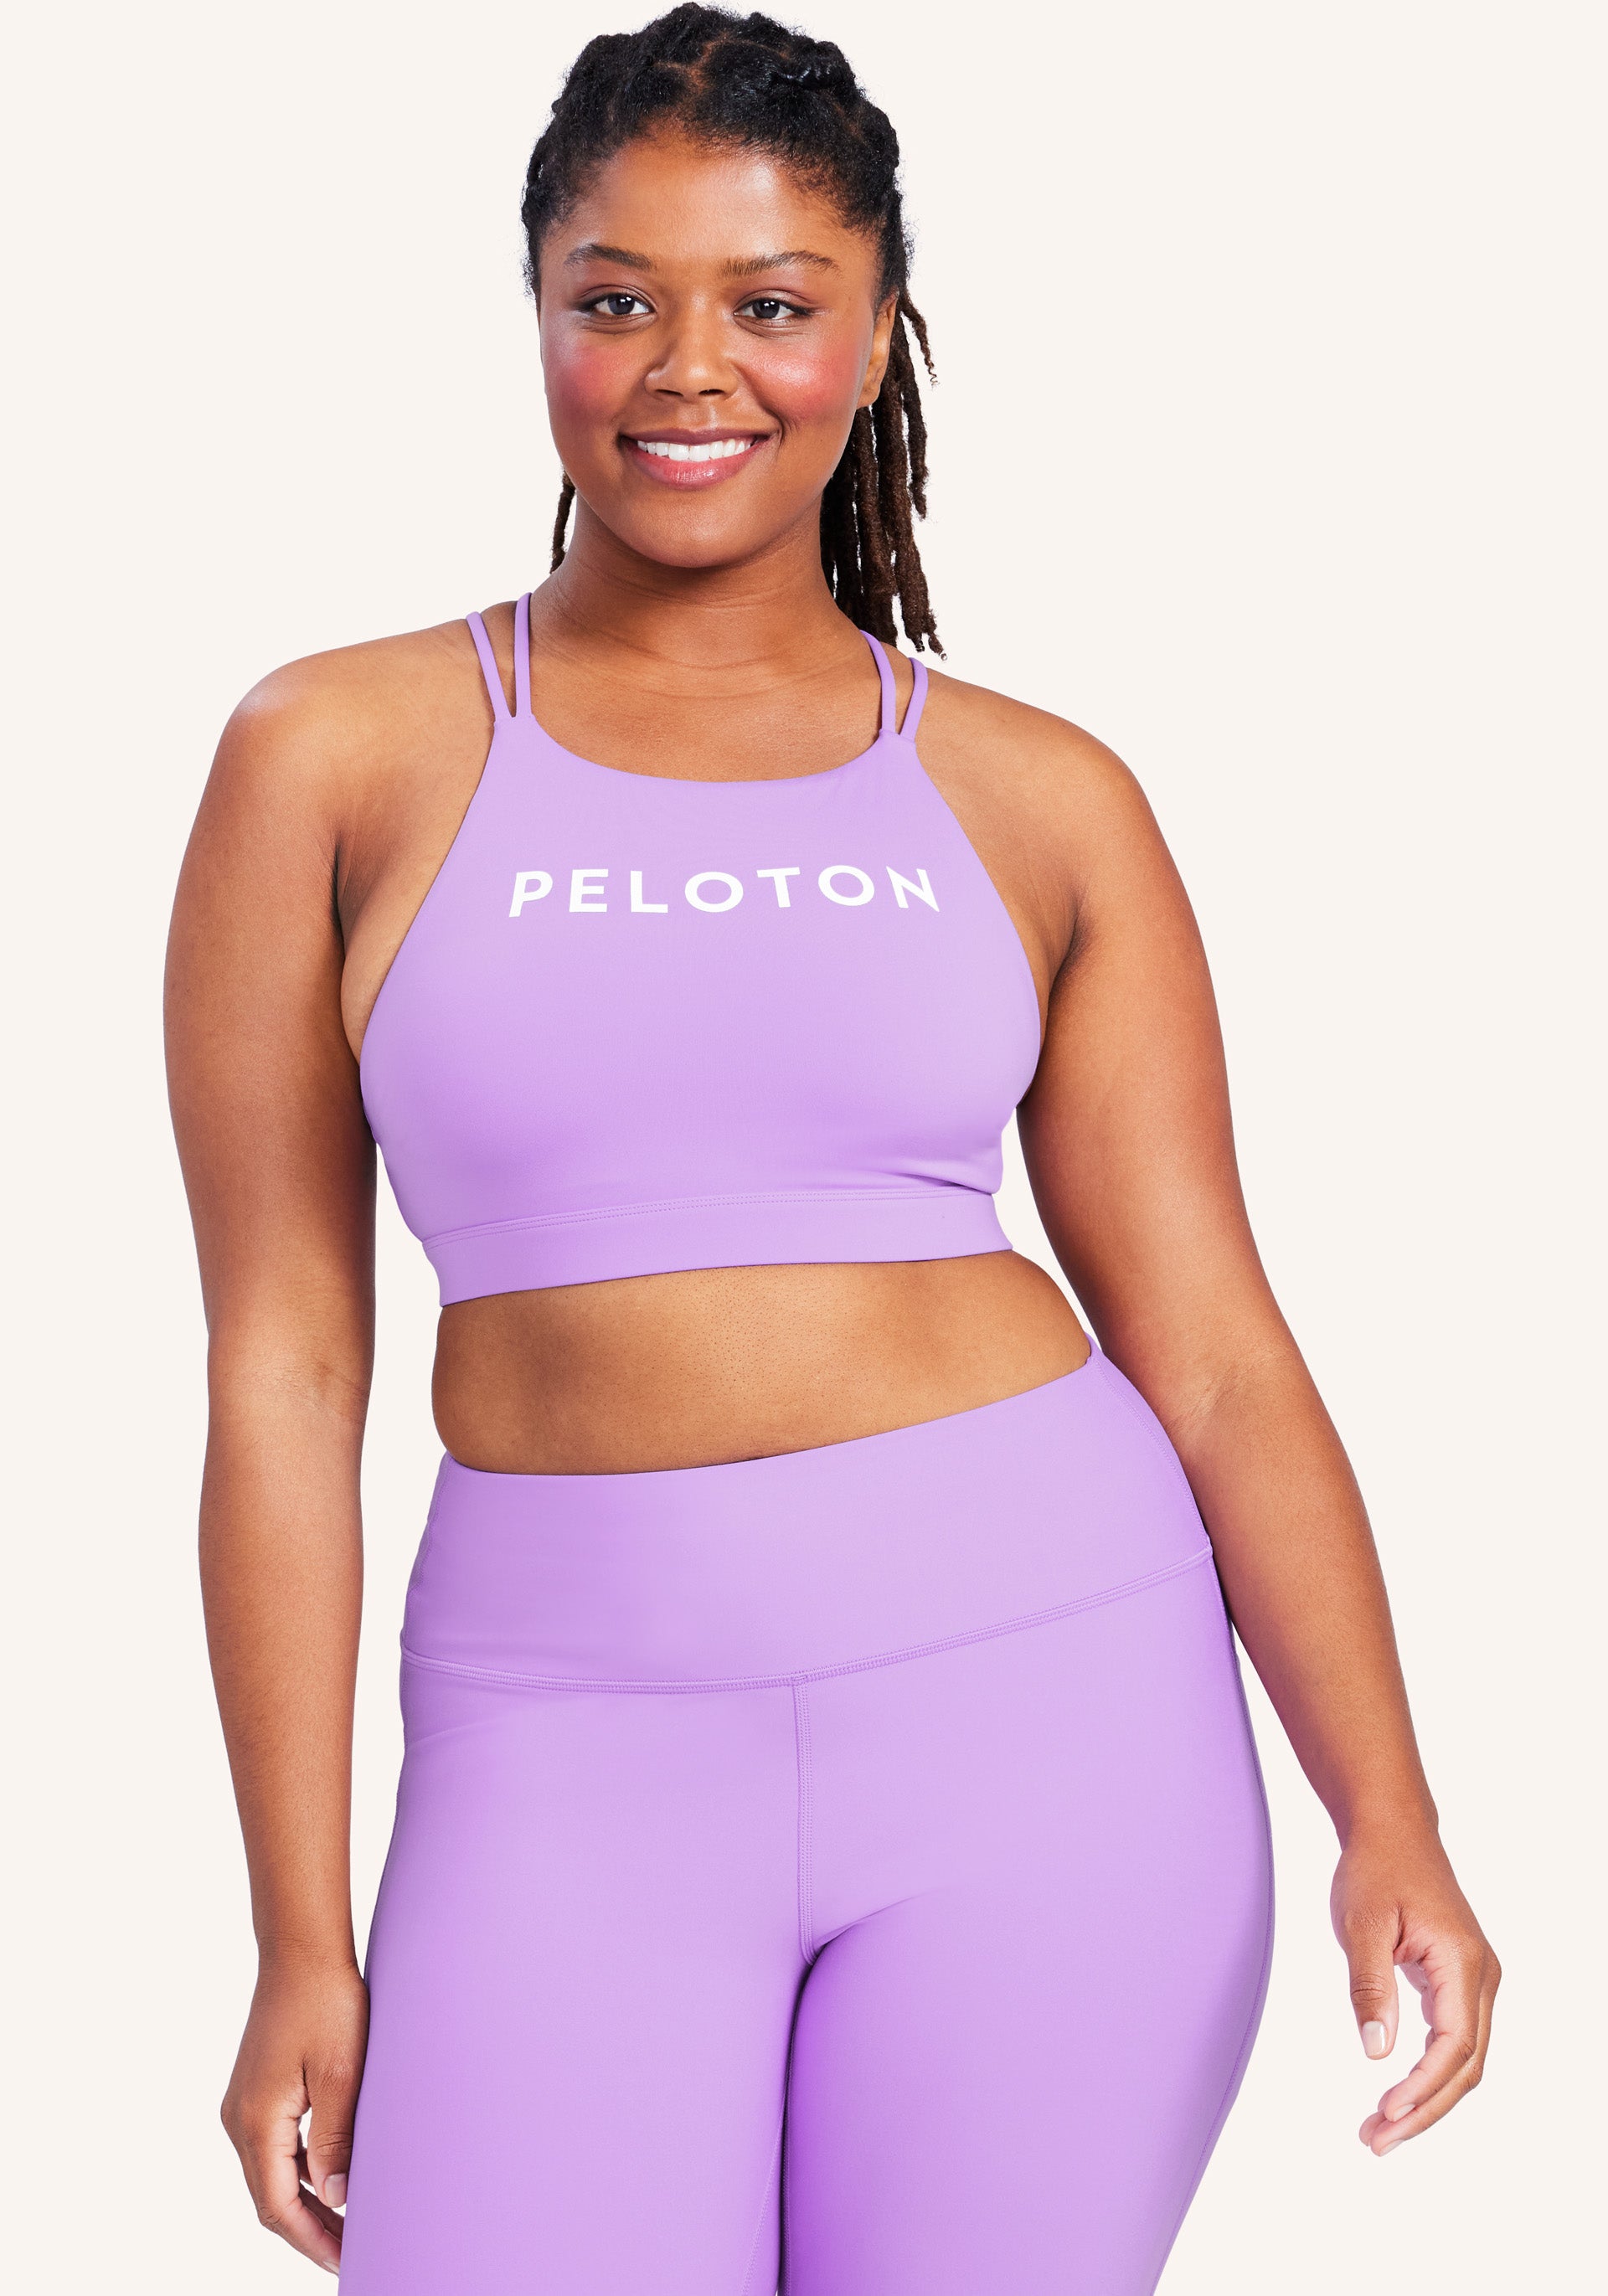 LELINTA Women's Removable Padded Sports Bras Medium Support Workout Yoga Bra  Purple Size S-L 